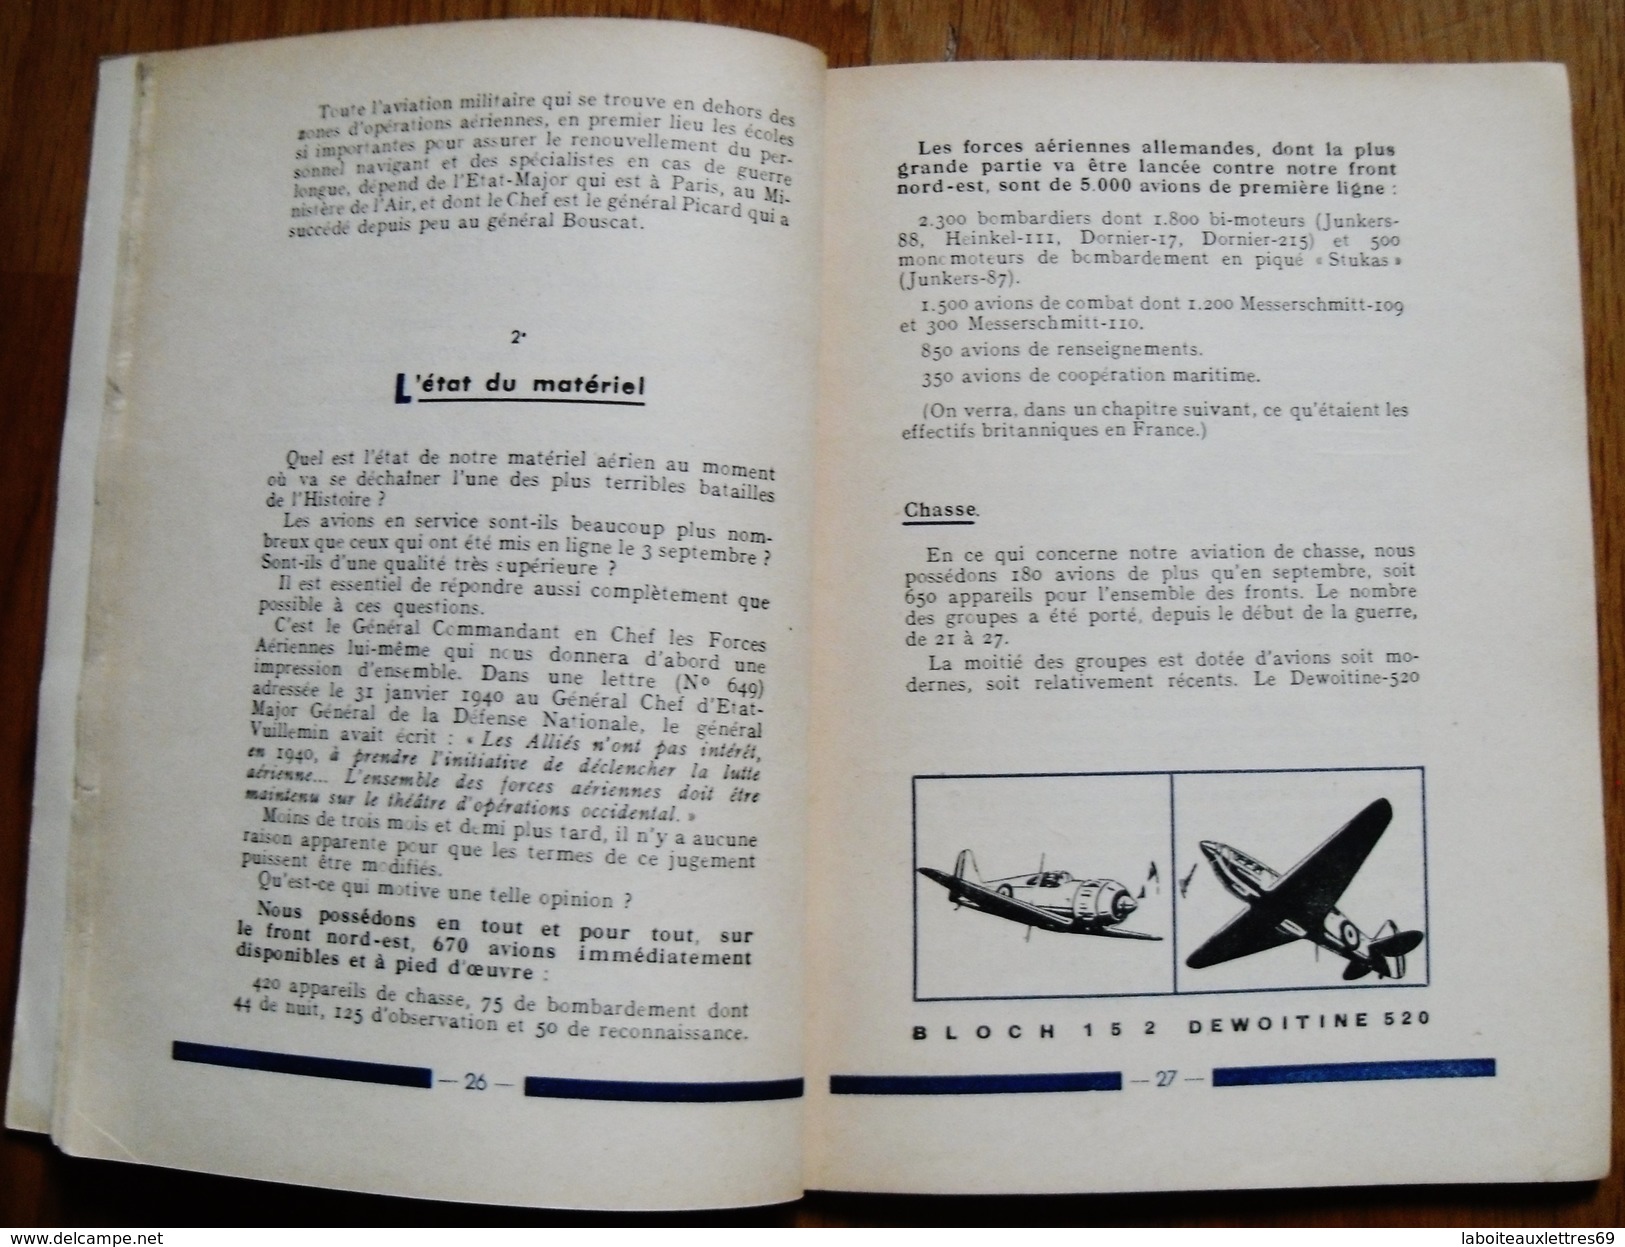 LIVRE DANS LE CIEL DE FRANCE-E. SEVERAC-03.09.1939-25.06.1940-ILLUSTR. NOETINGER - Flugzeuge